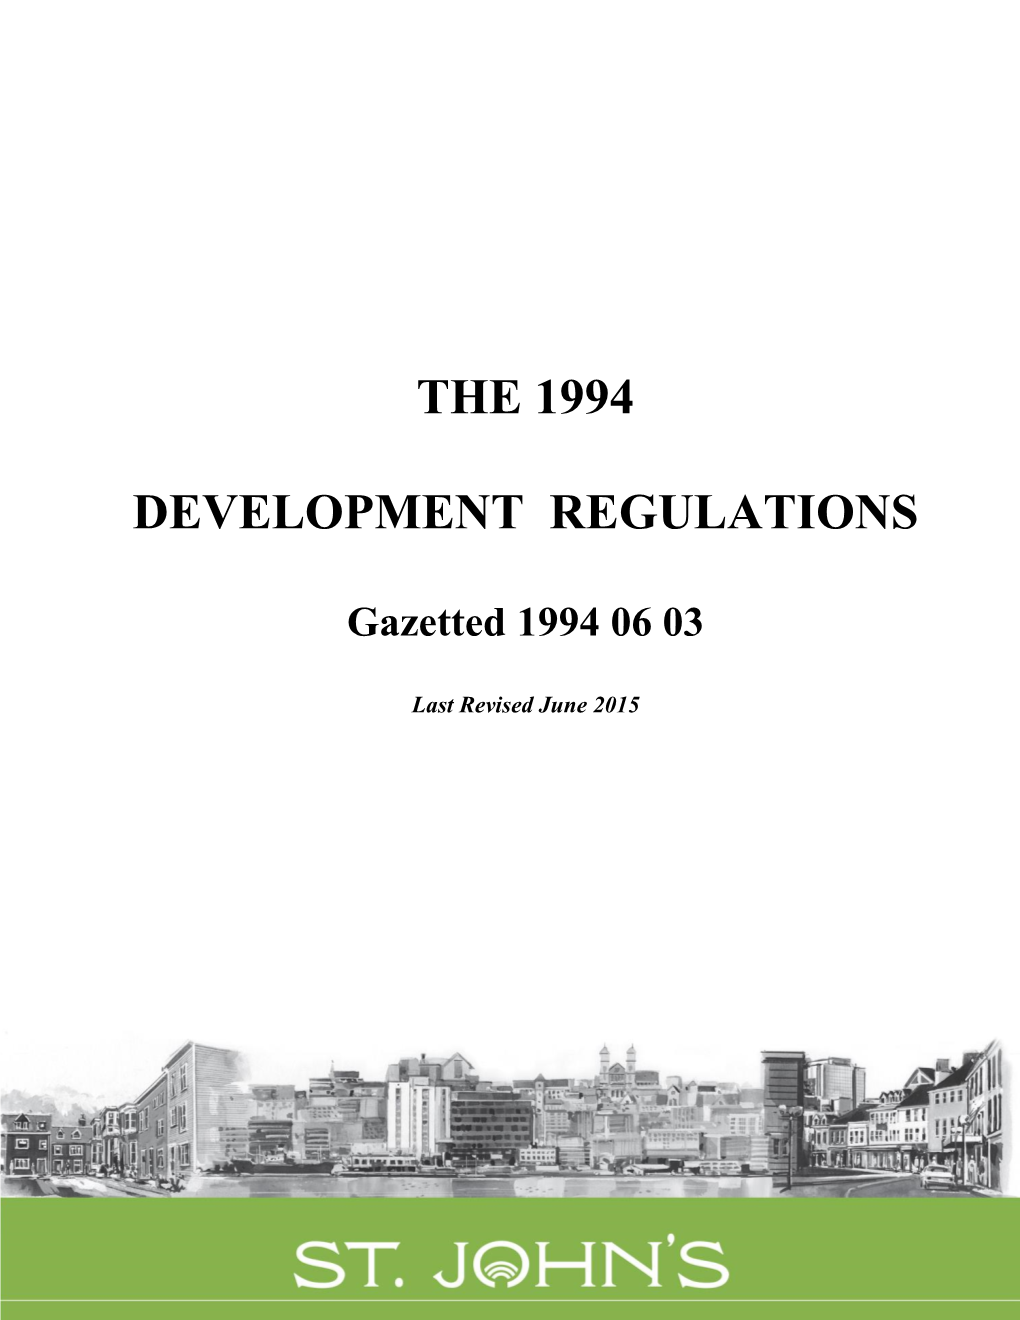 The 1994 Development Regulations